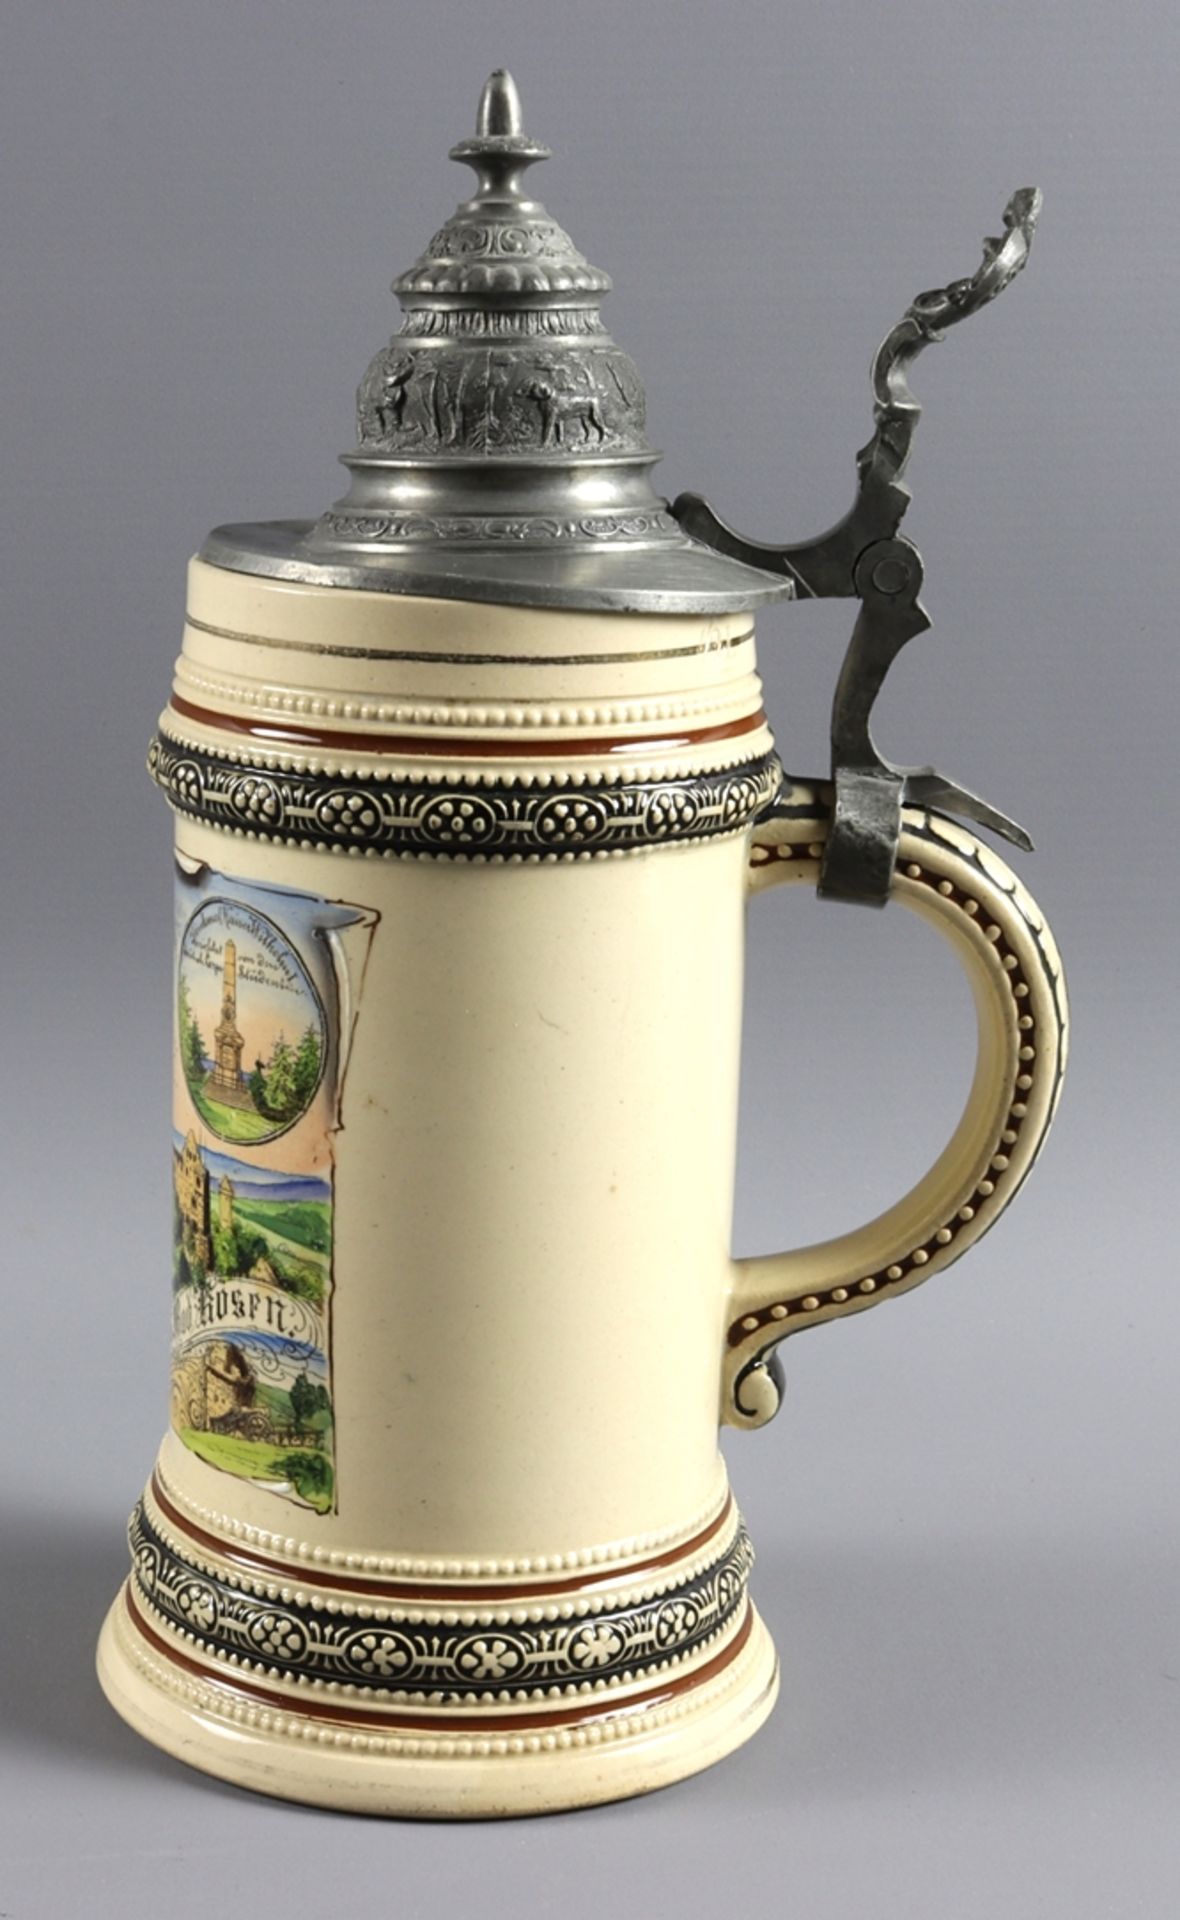 Memorial jug of the town of Kösen, Historicism circa 1900, German - Image 2 of 4